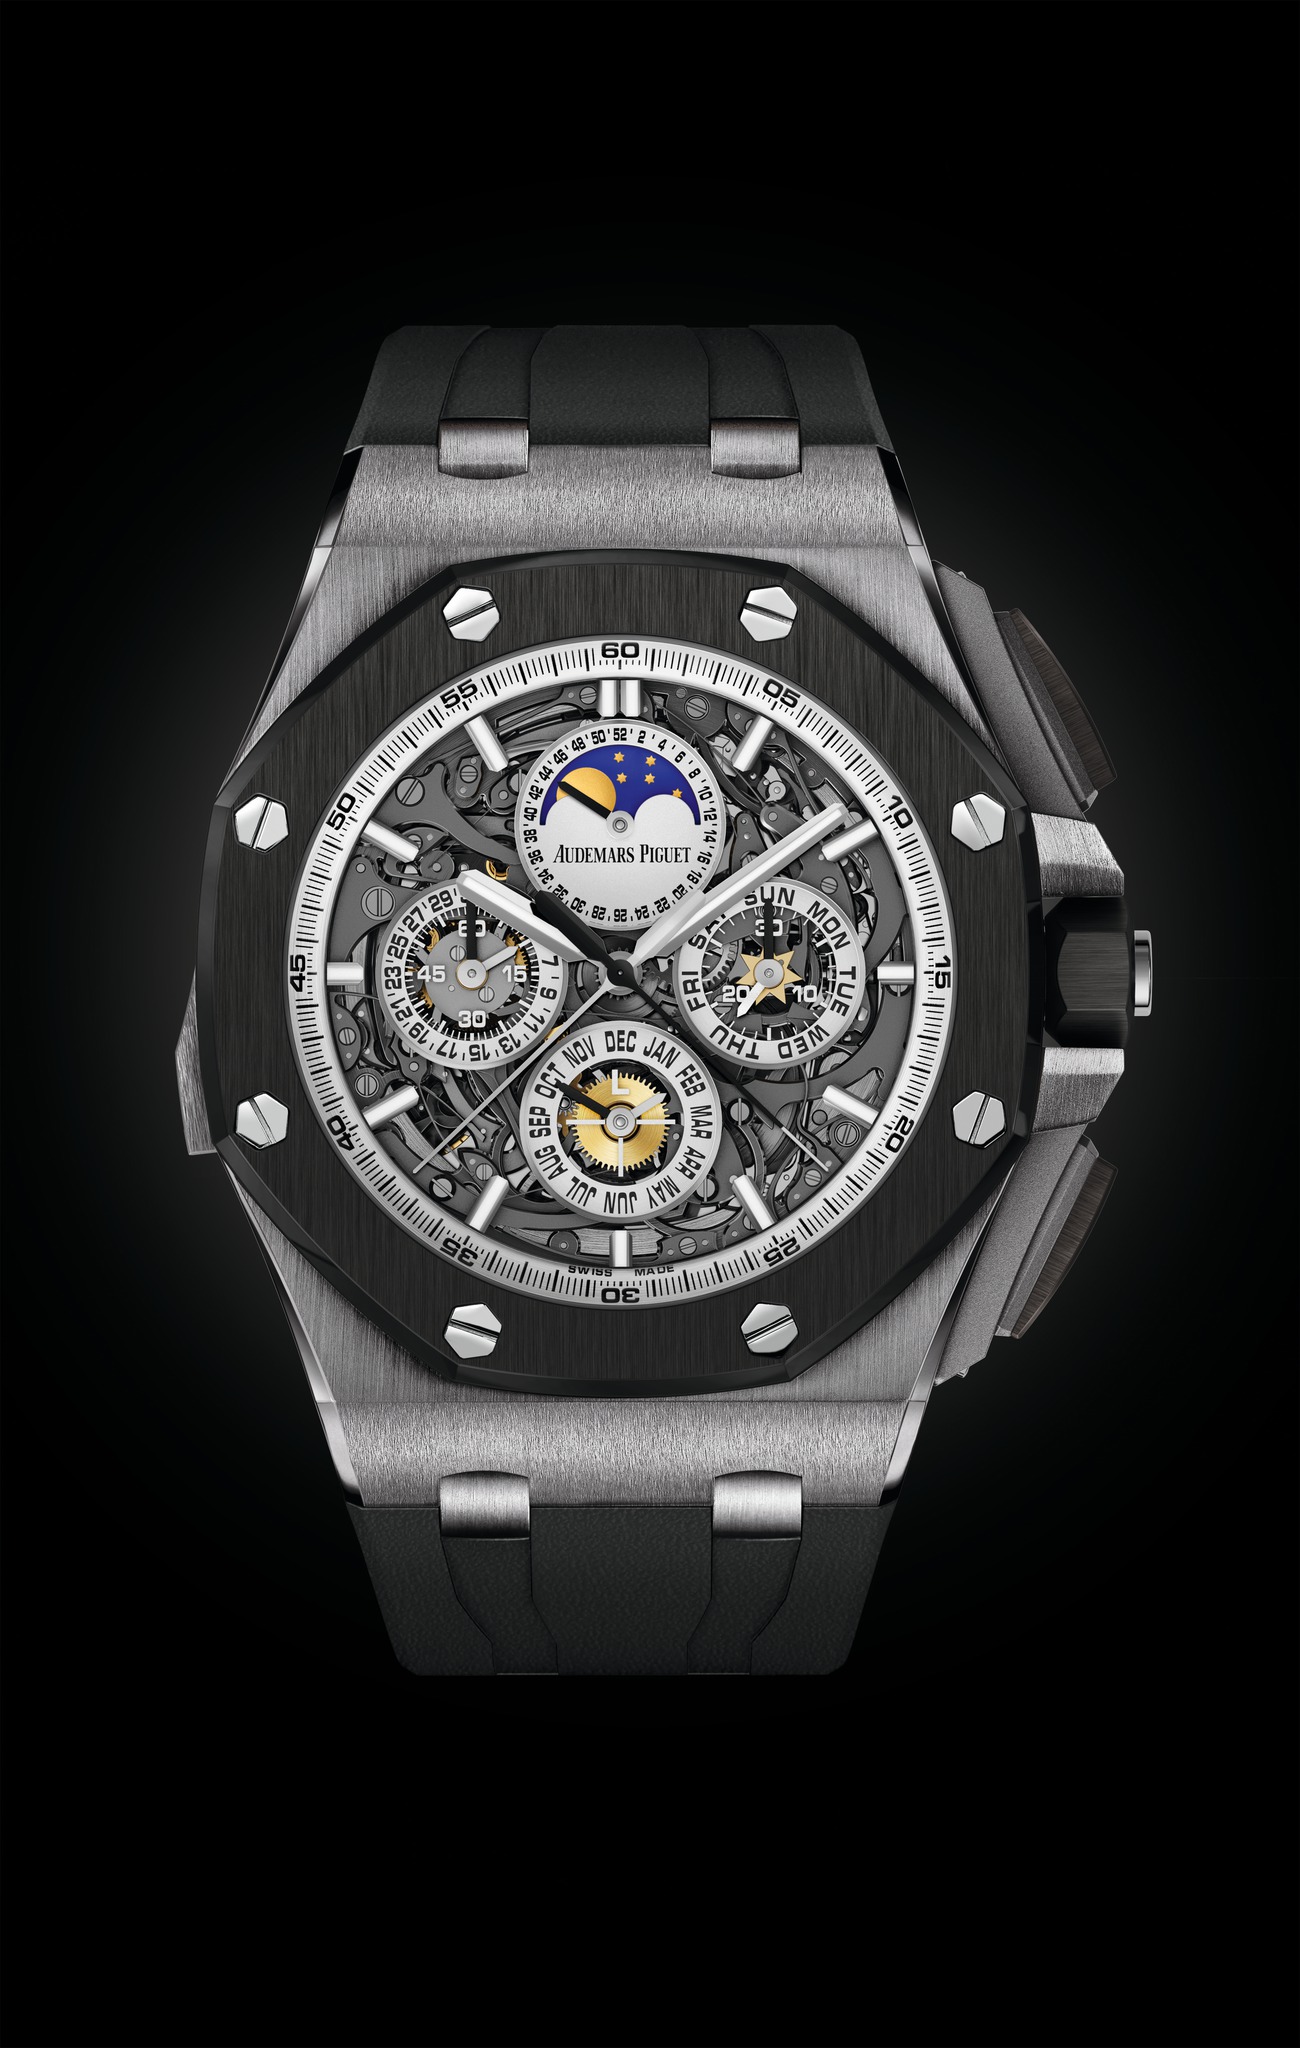 Audemars Piguet Royal Oak Offshore Grande Complication Titanium watch REF: 26571IO.OO.A010CA.01 - Click Image to Close